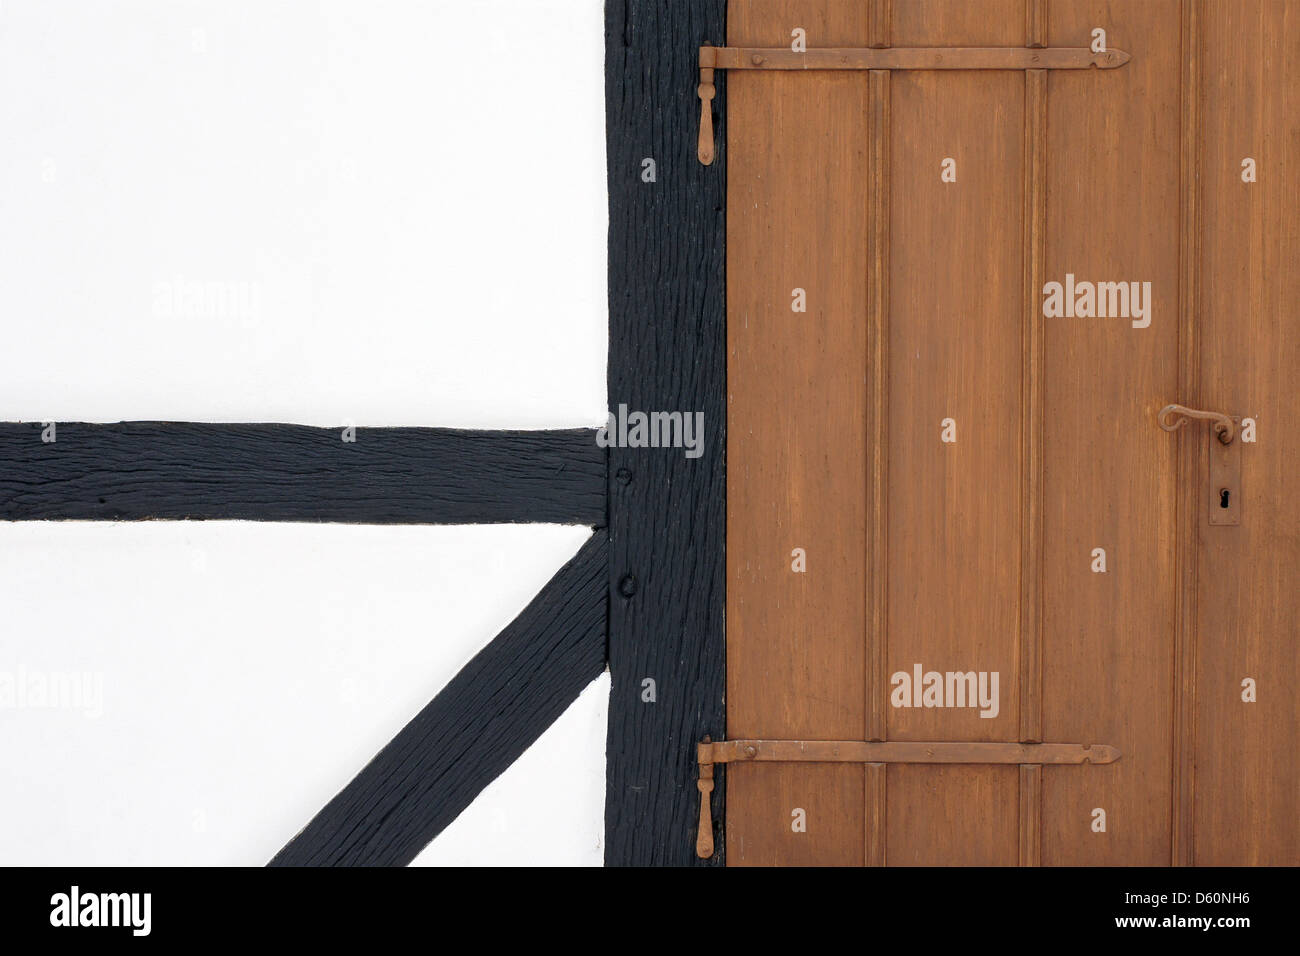 Half-timbered facade with door Stock Photo